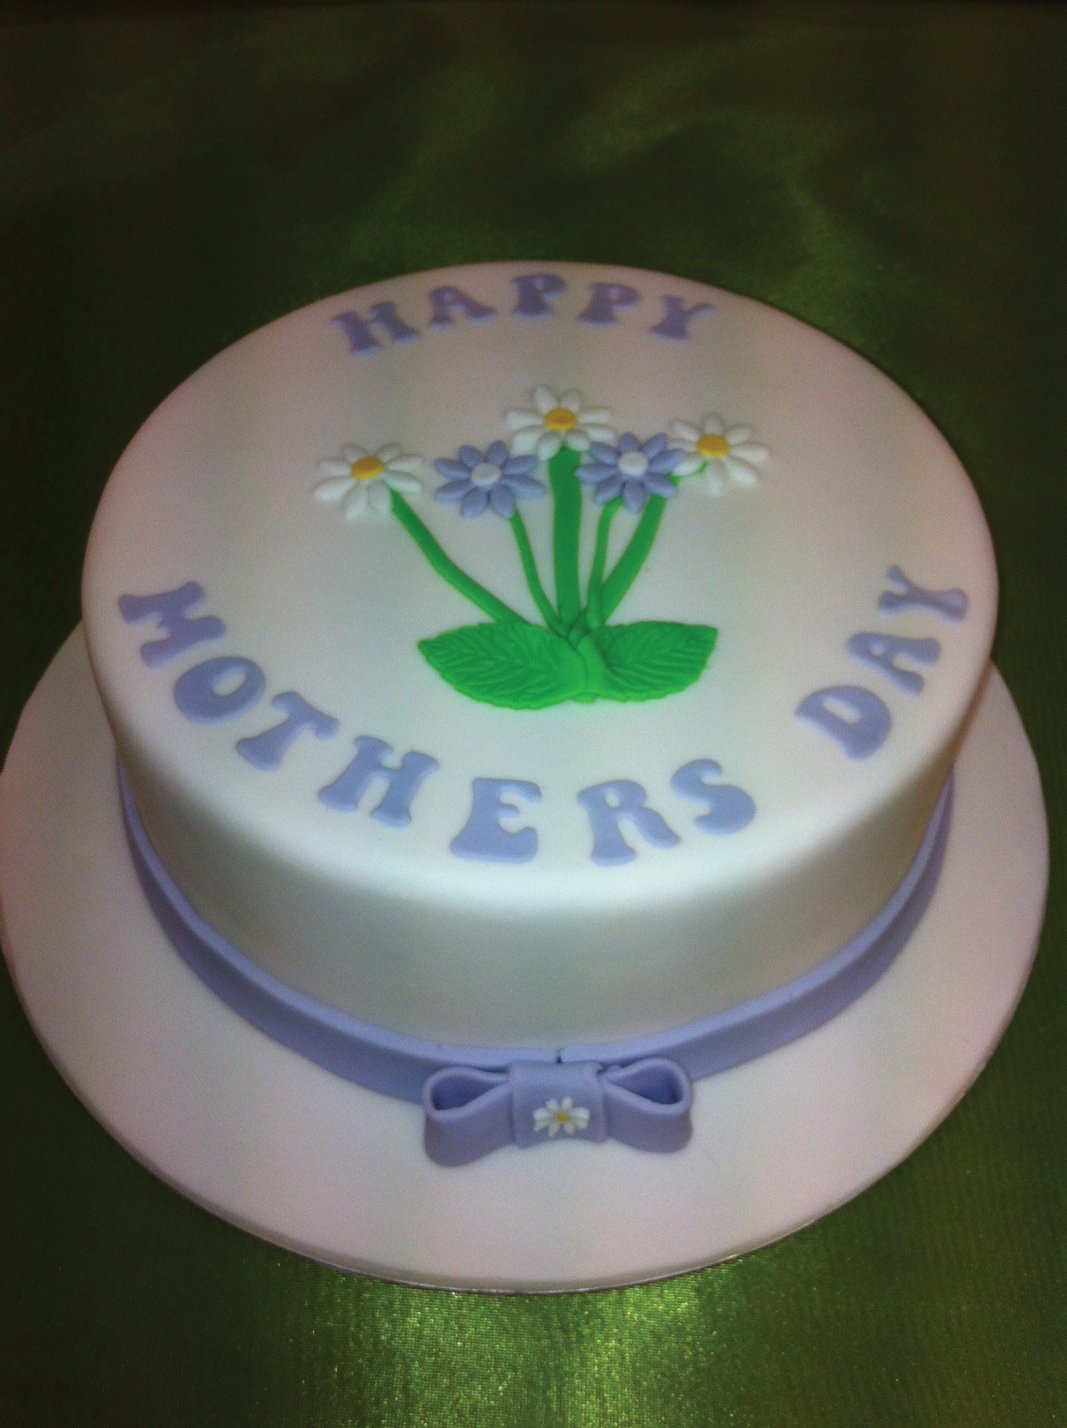 mothers day cakes
www.peekaboopartycakes/blog